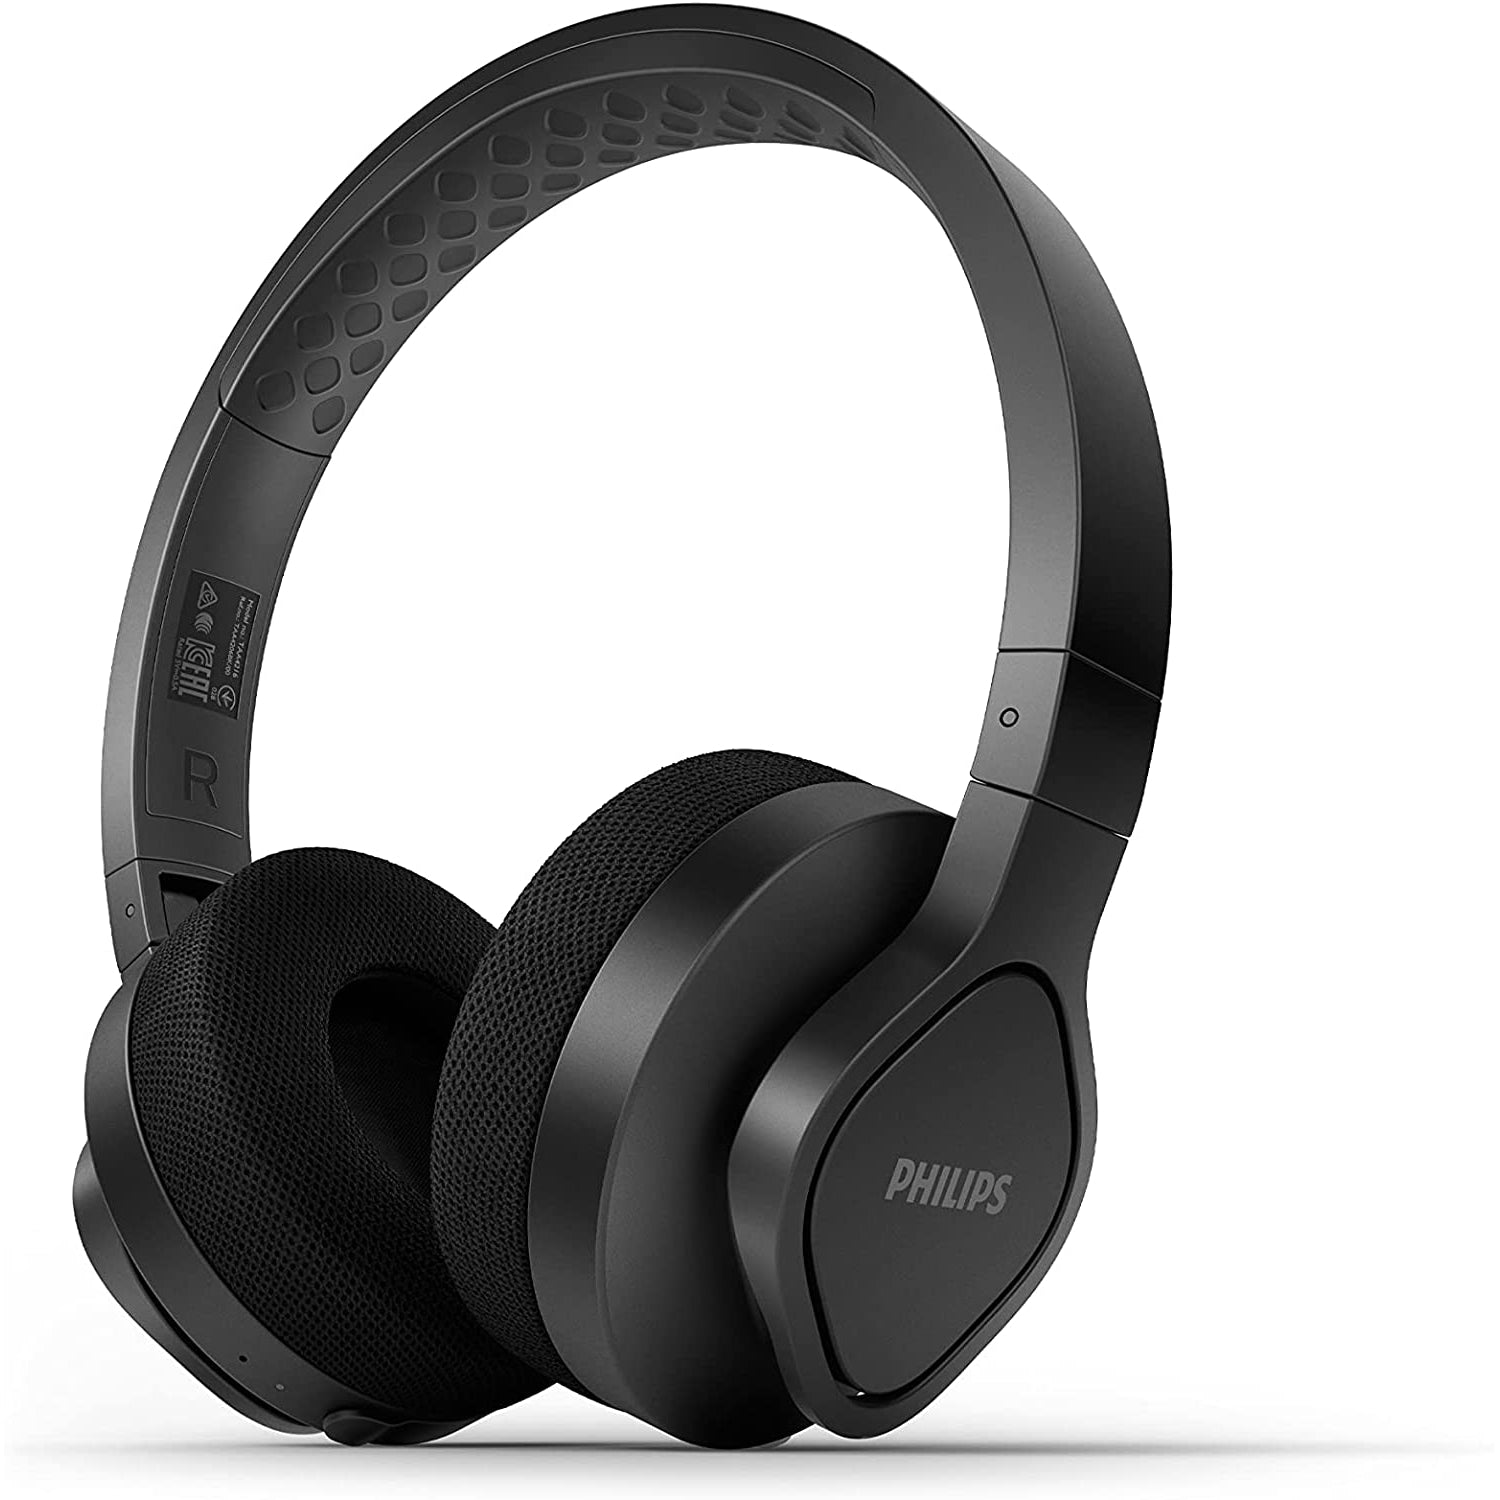 Philips 4000 Series - (TAA4216BK/00) Wireless Bluetooth Sports Headphones - Black